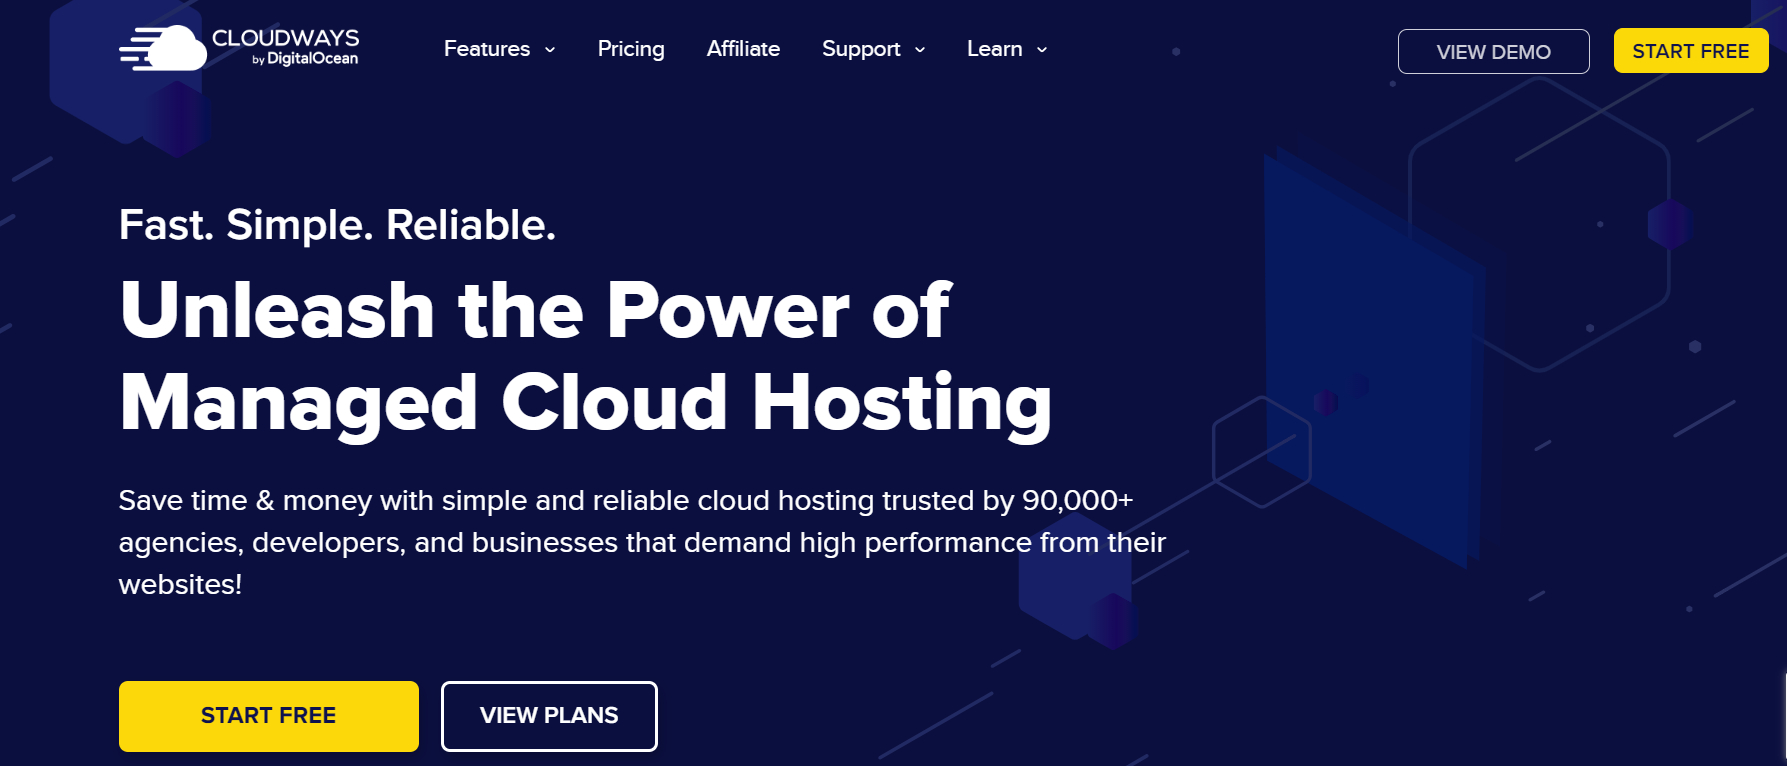 Cloudways cloud hosting review | TechRadar